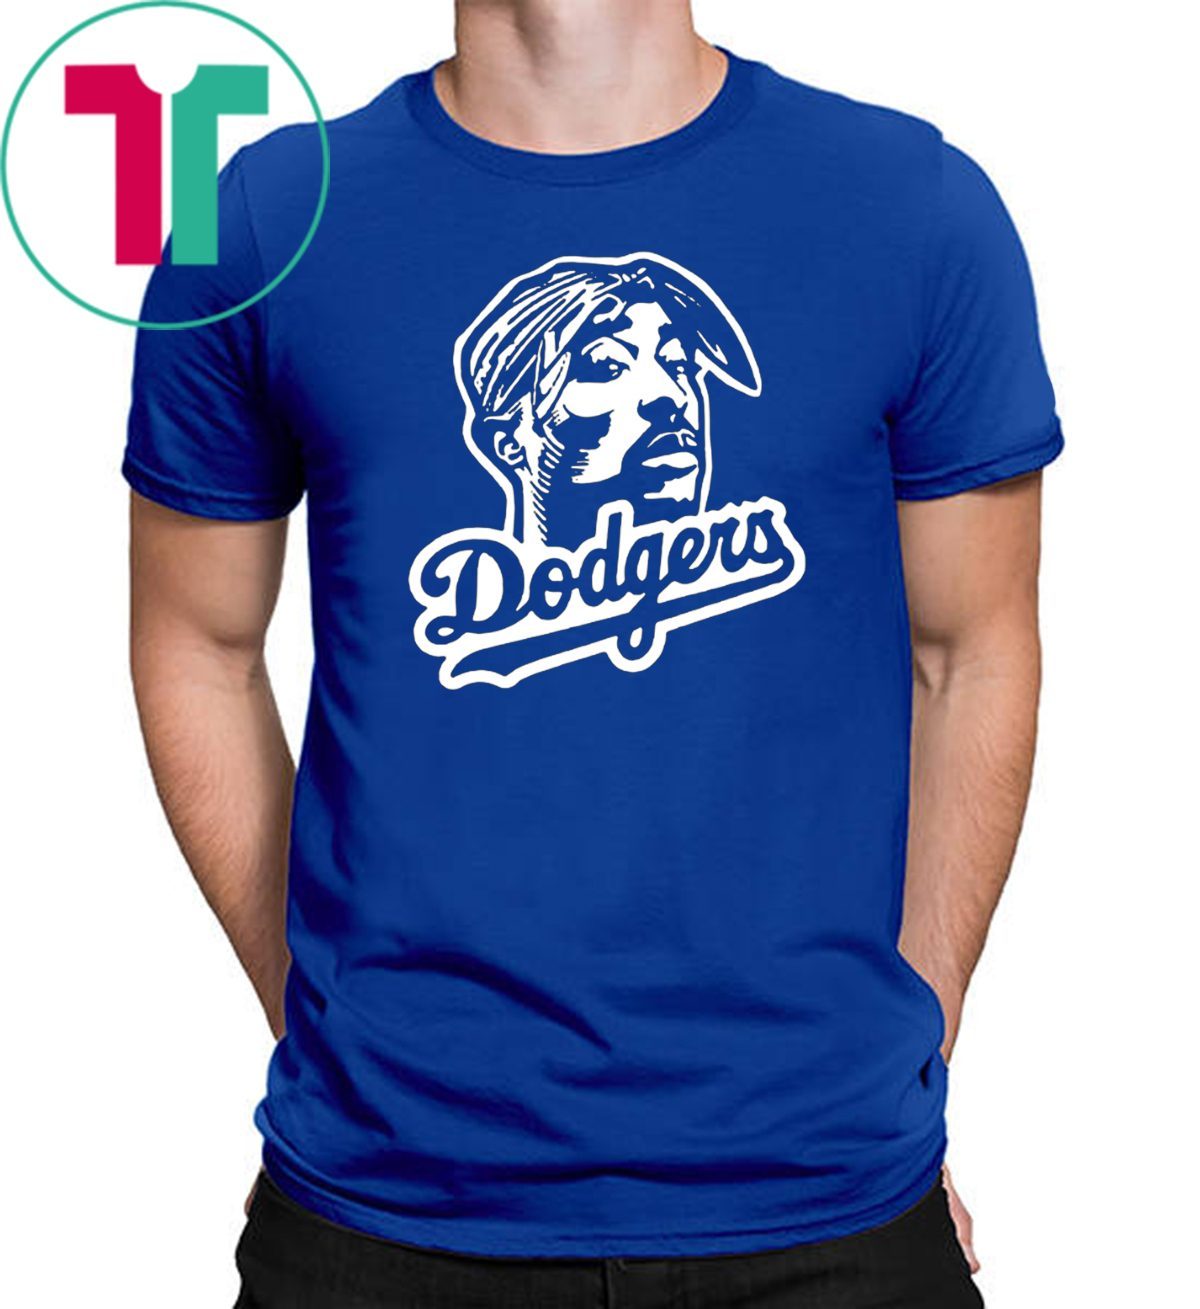 Tupac Shakur 2pac Dodgers Shirt